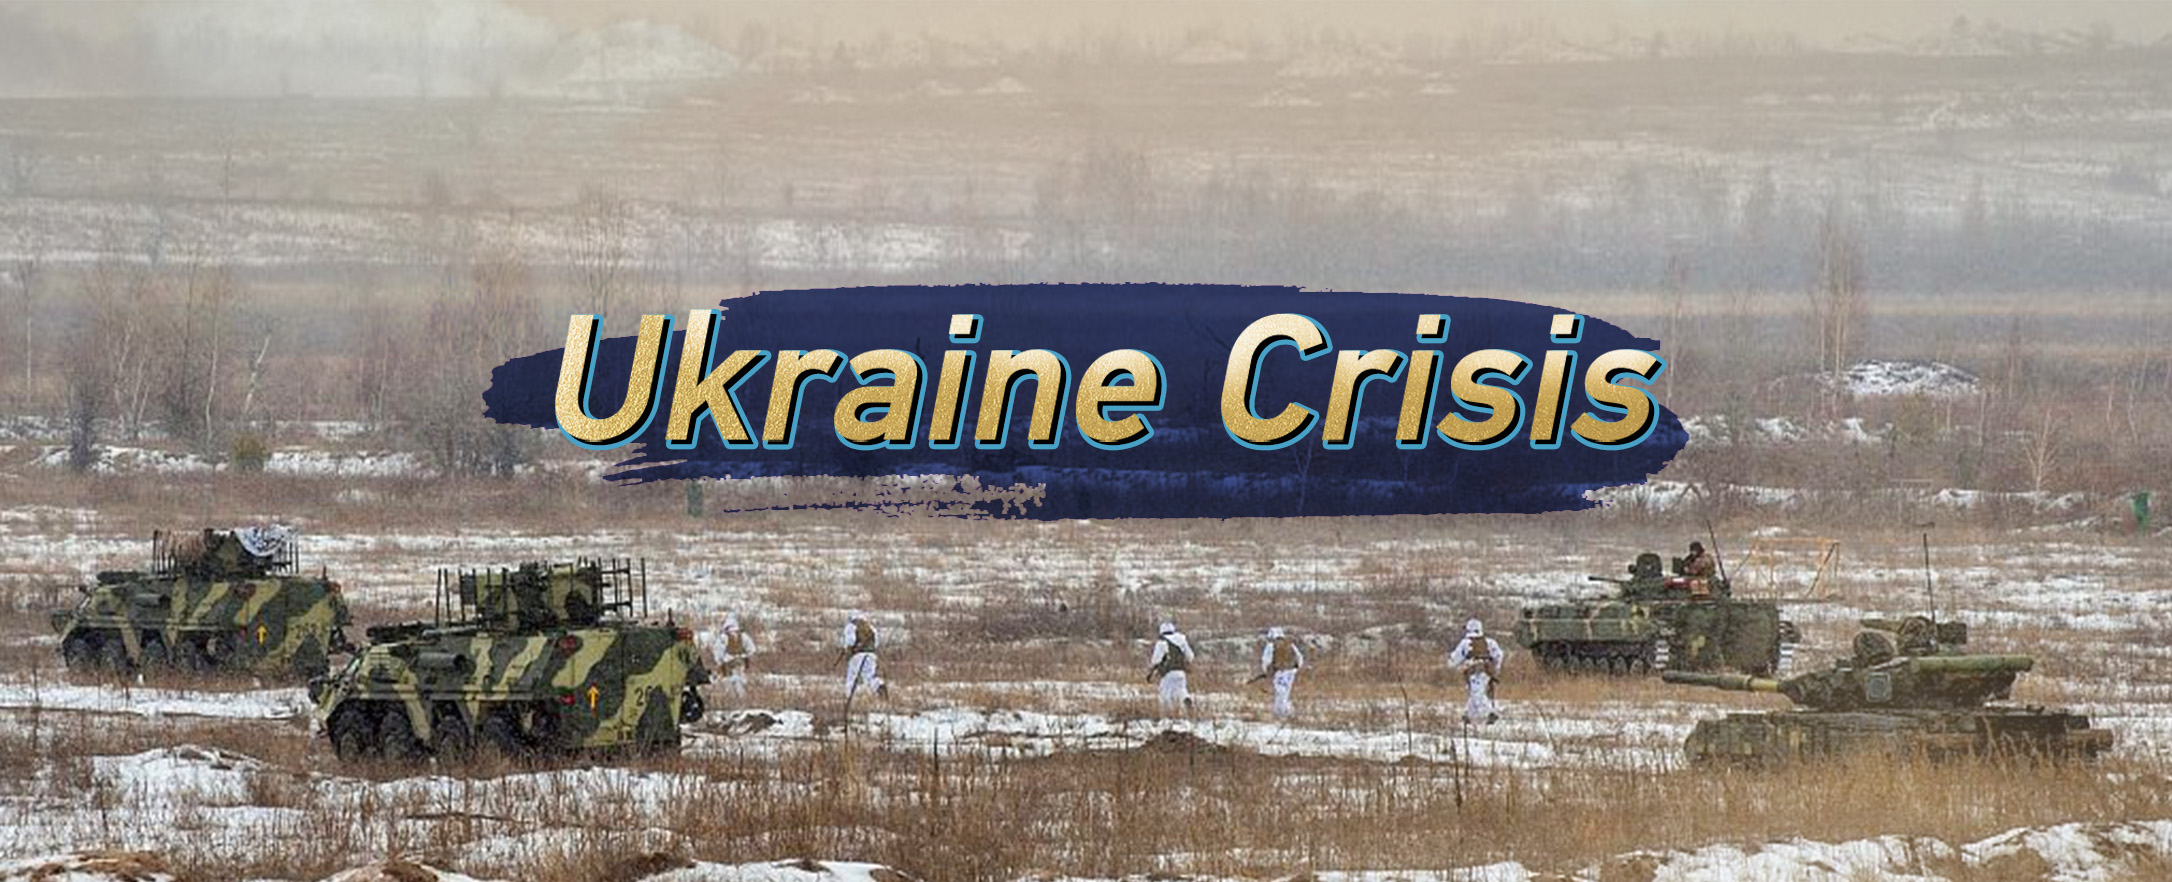 UKRAINE CRISIS